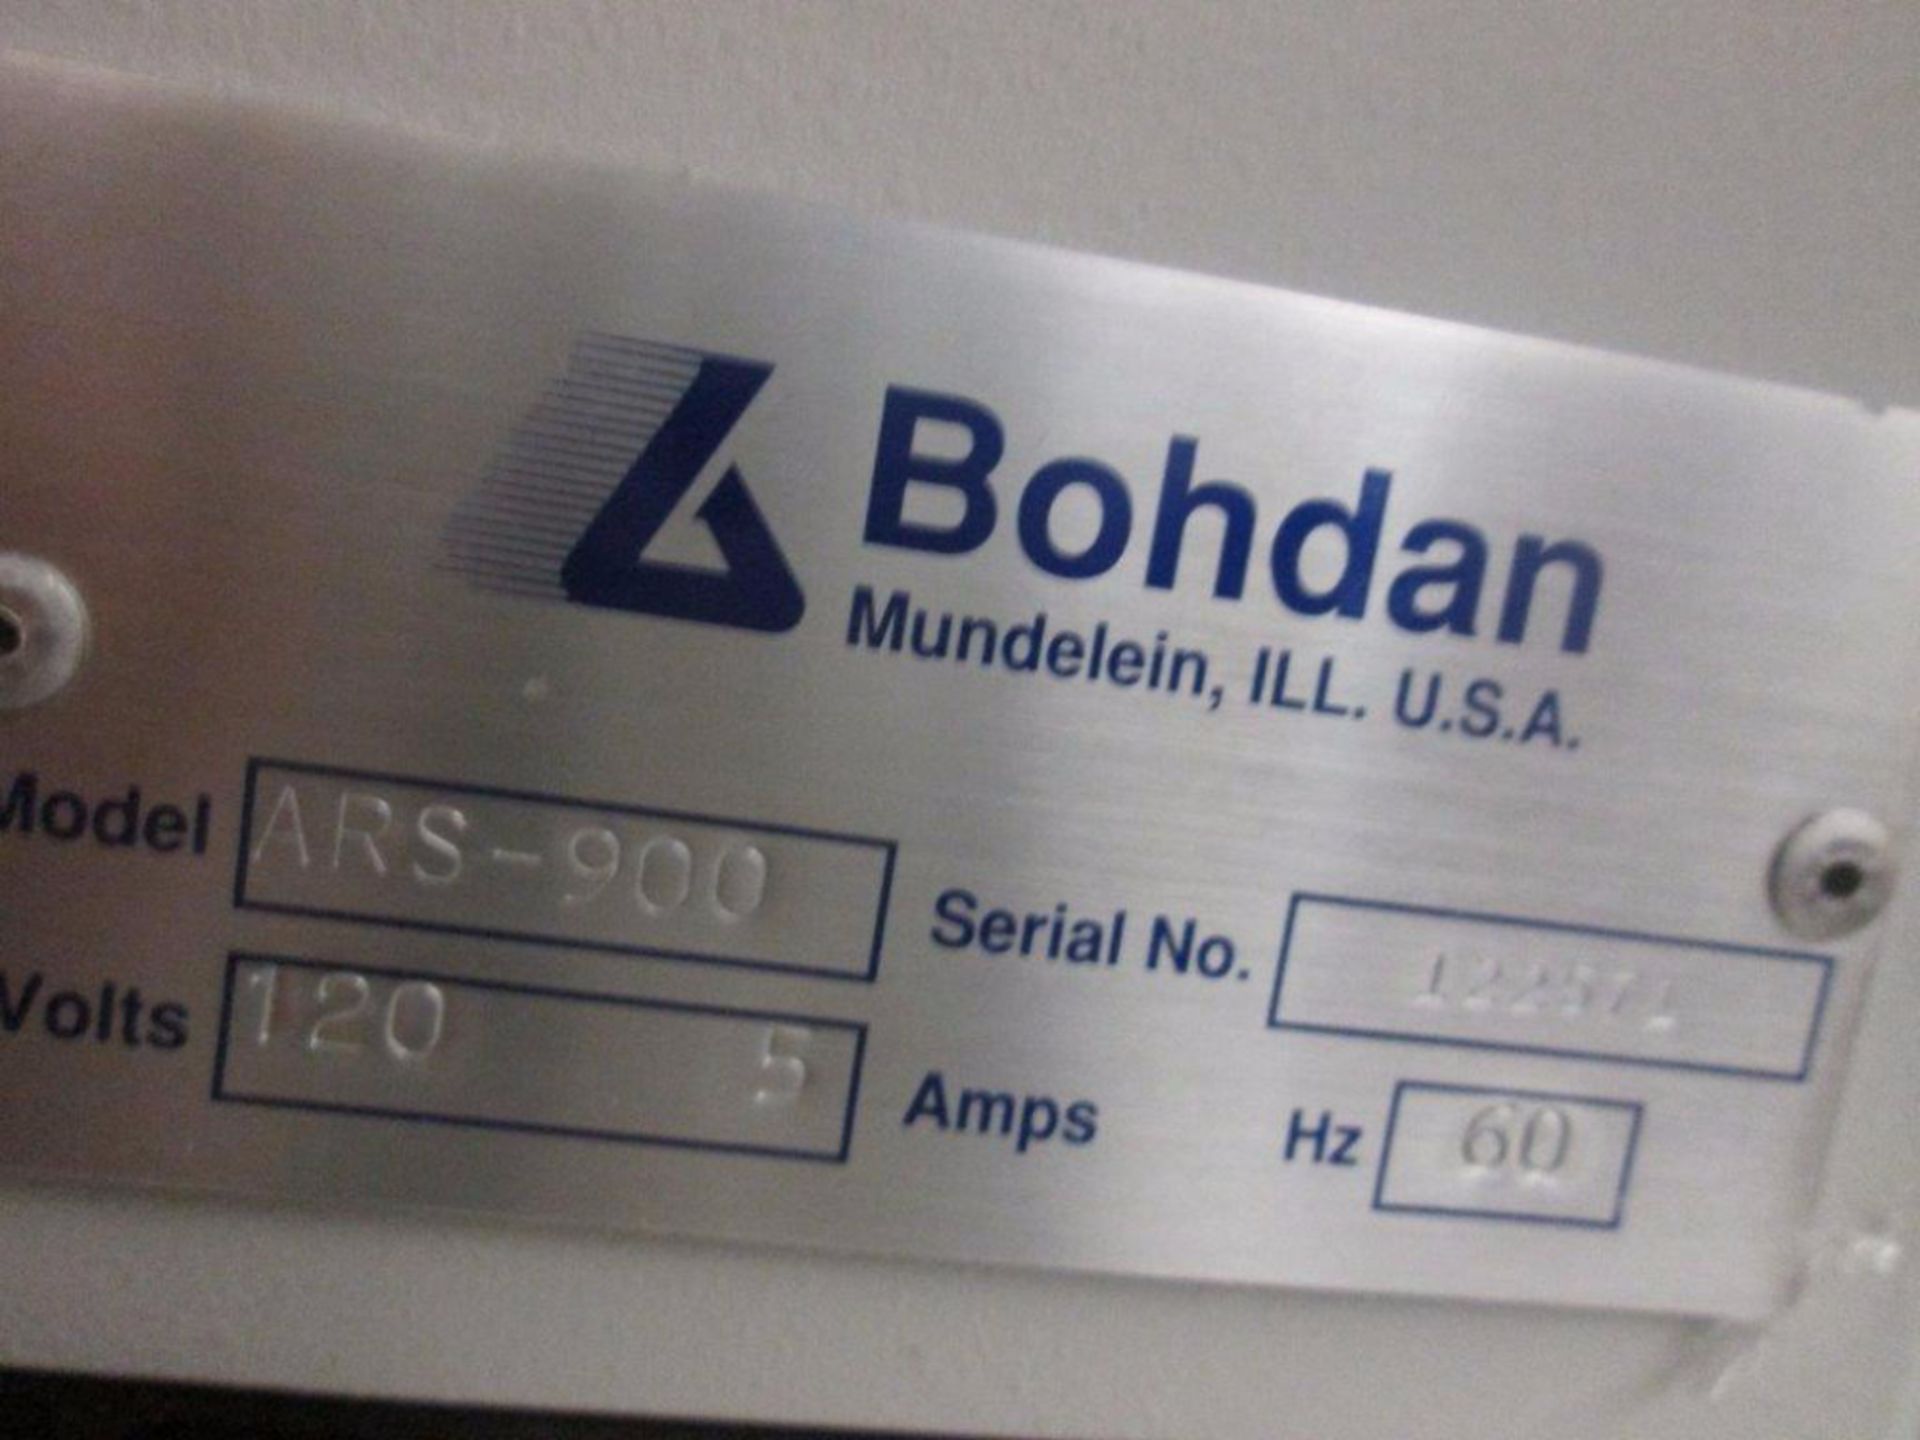 Bohdan Automation ARS-900 Liquid Handling System - Image 7 of 10